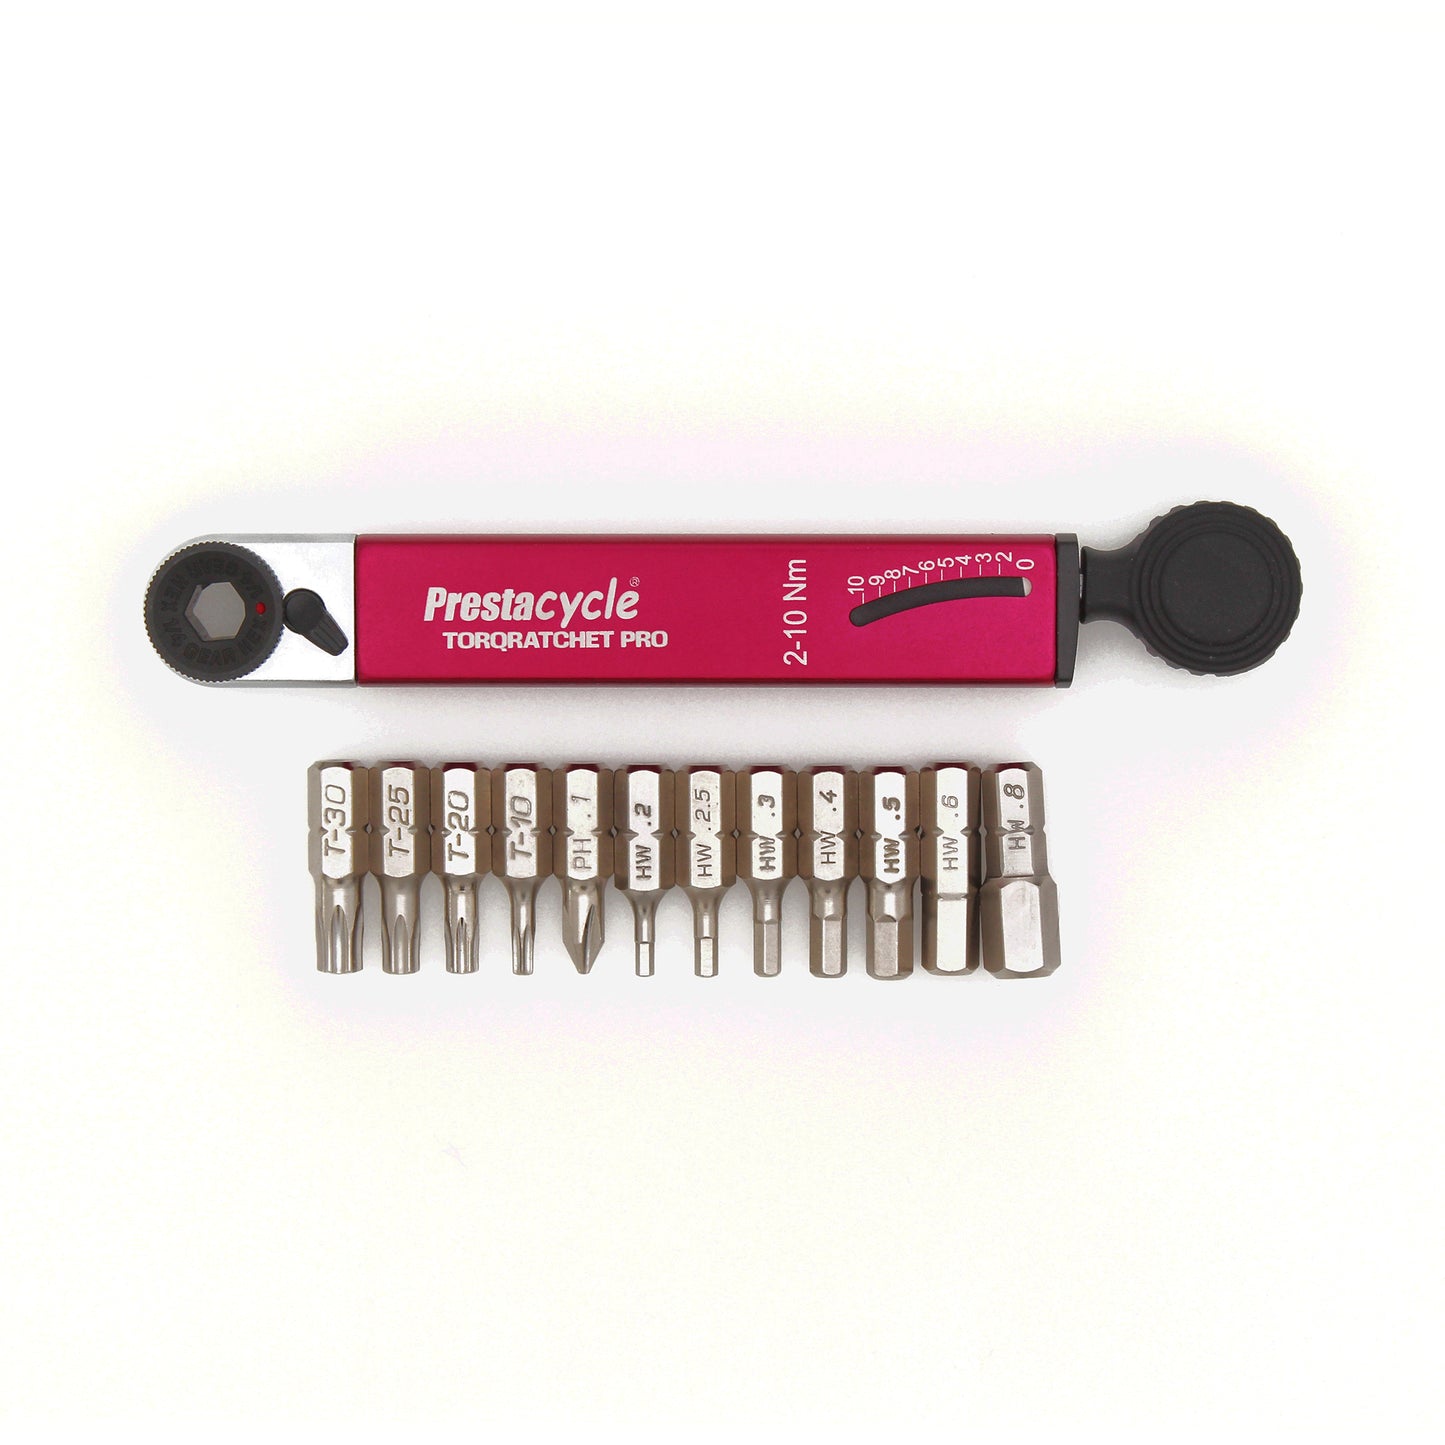 Prestacycle TorqRatchet PRO Deluxe - Pro Pocket Multi-tool and 2~10Nm Torque Ratchet